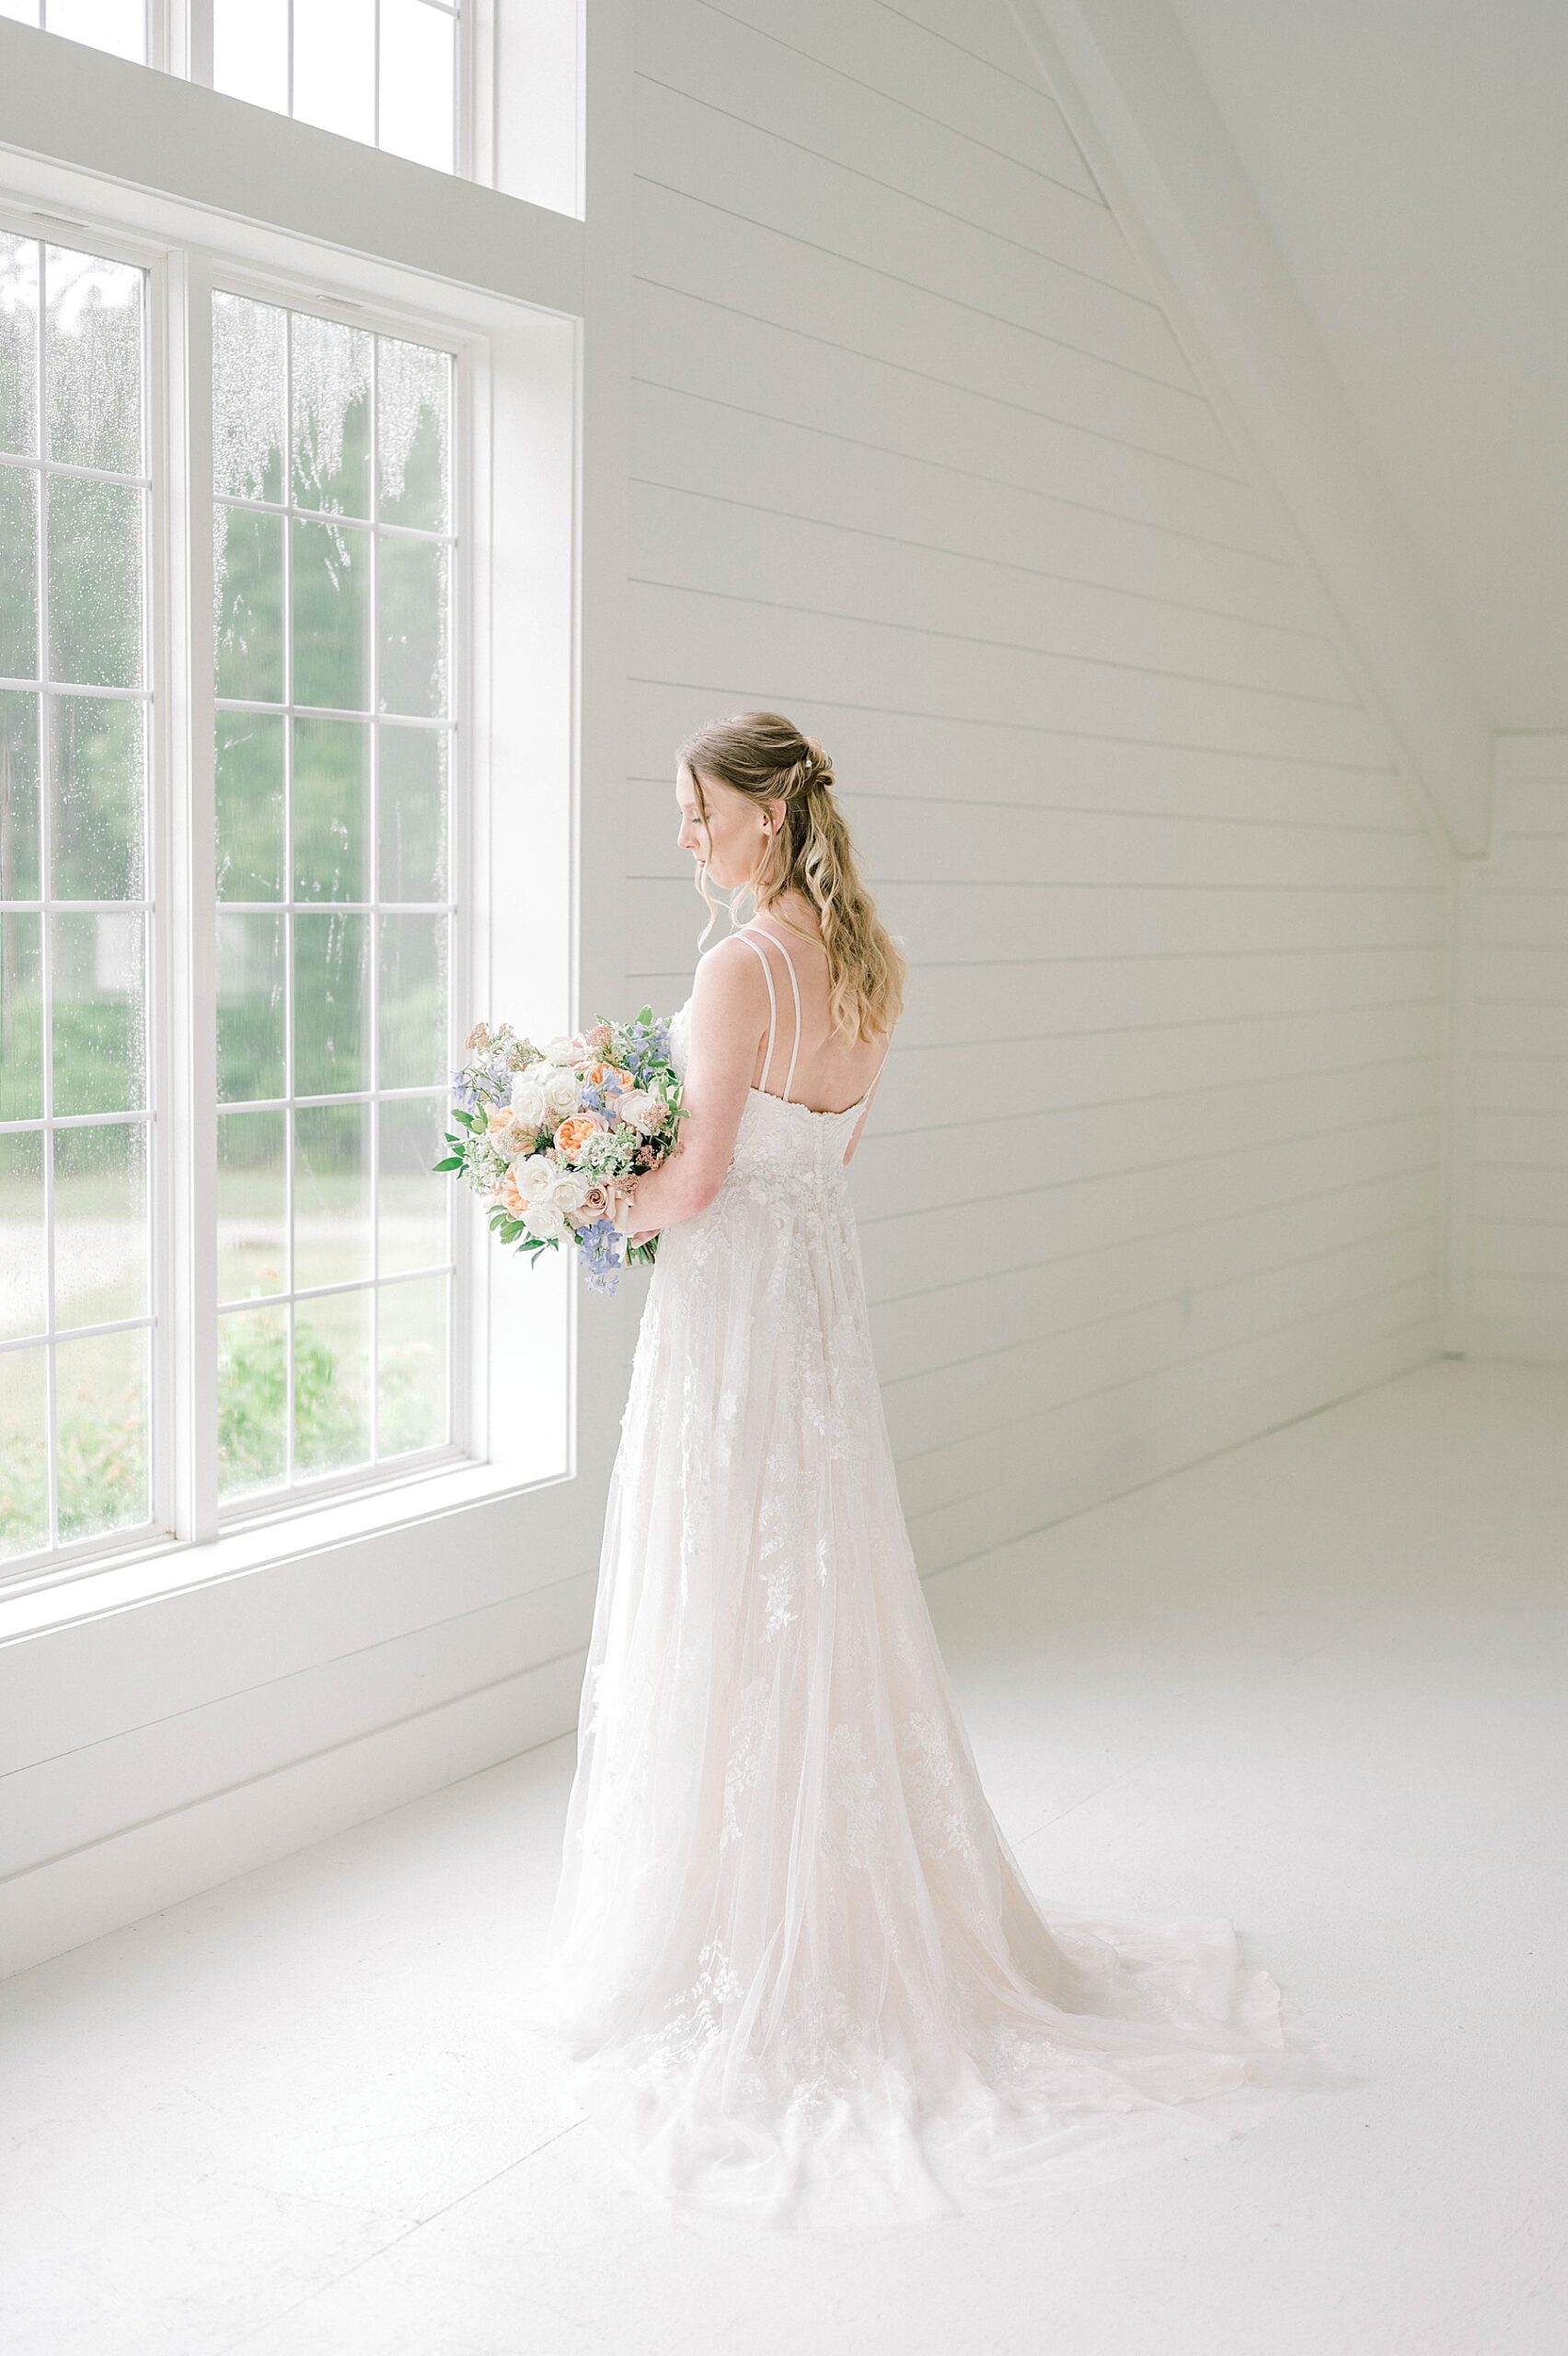 Bridal portrait with natural light